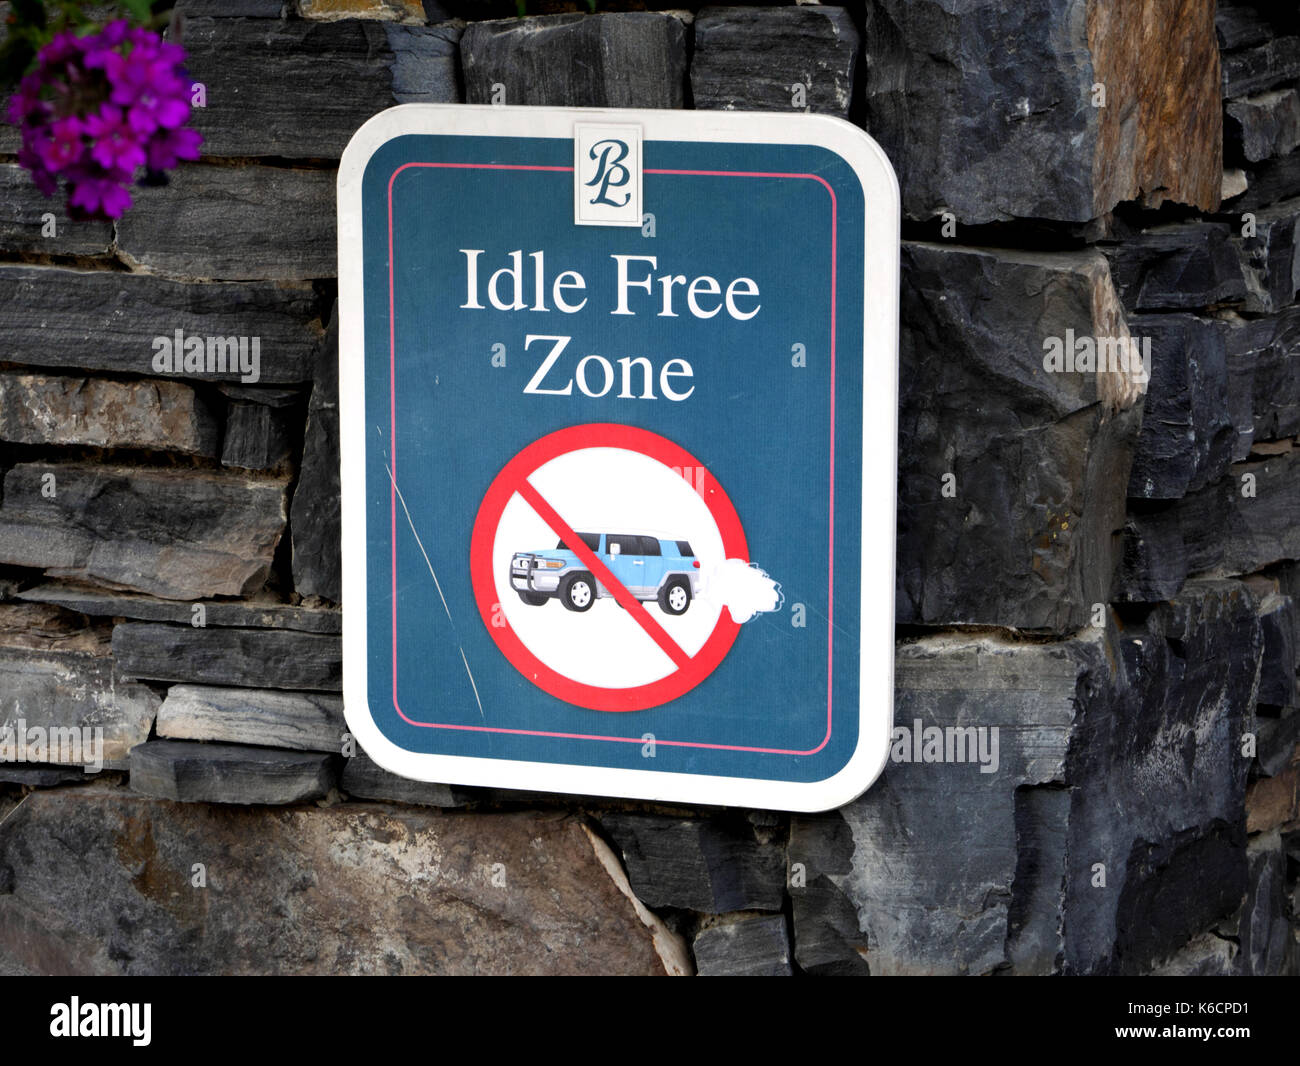 'Idle-free zone' notice, Banff, Canada. Stock Photo